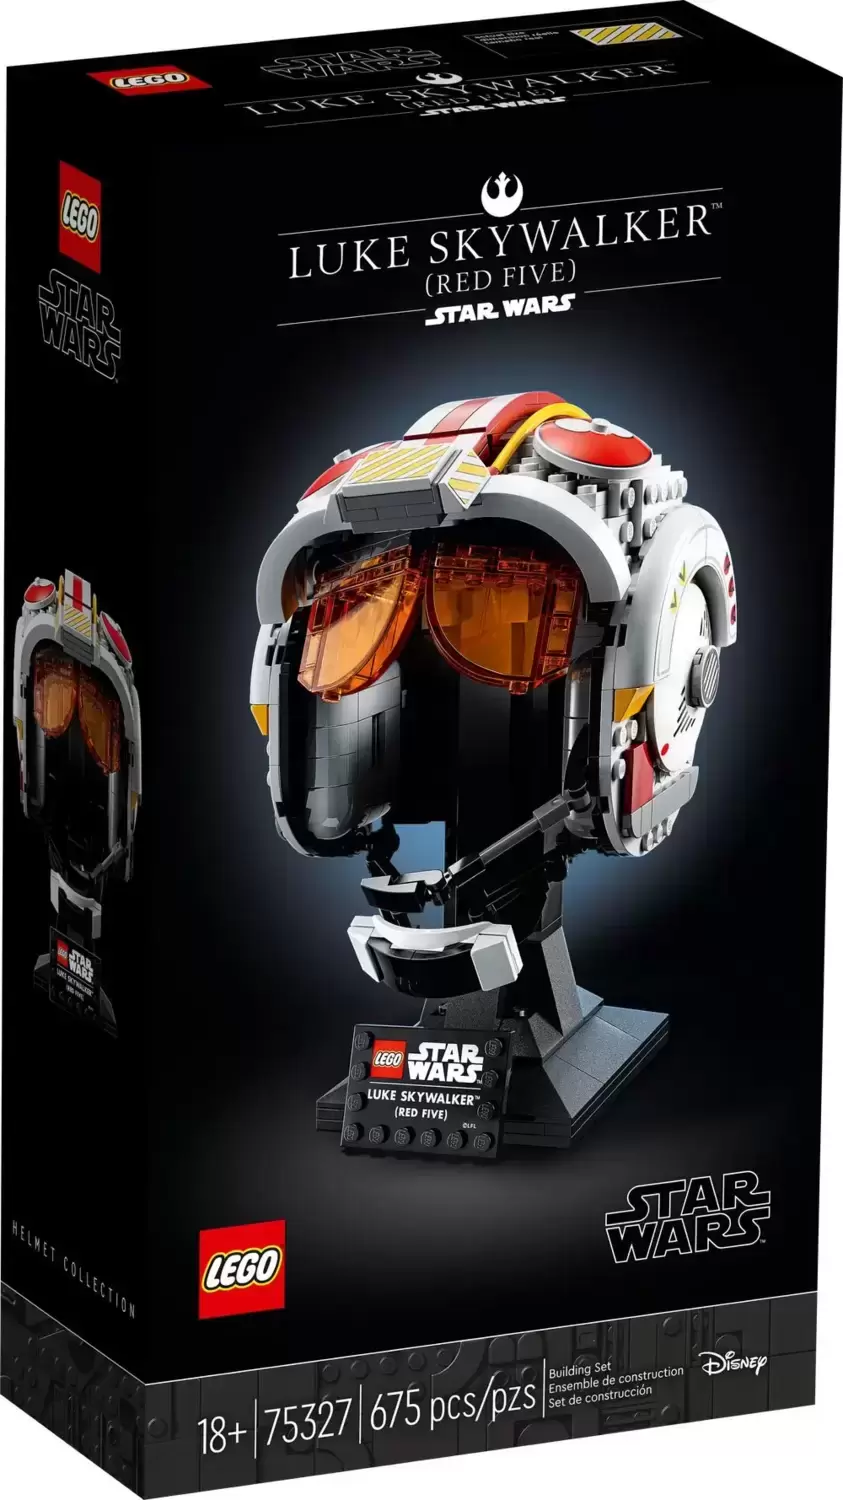 LEGO Star Wars - Luke Skywalker (Red Five) - Helmet Collection